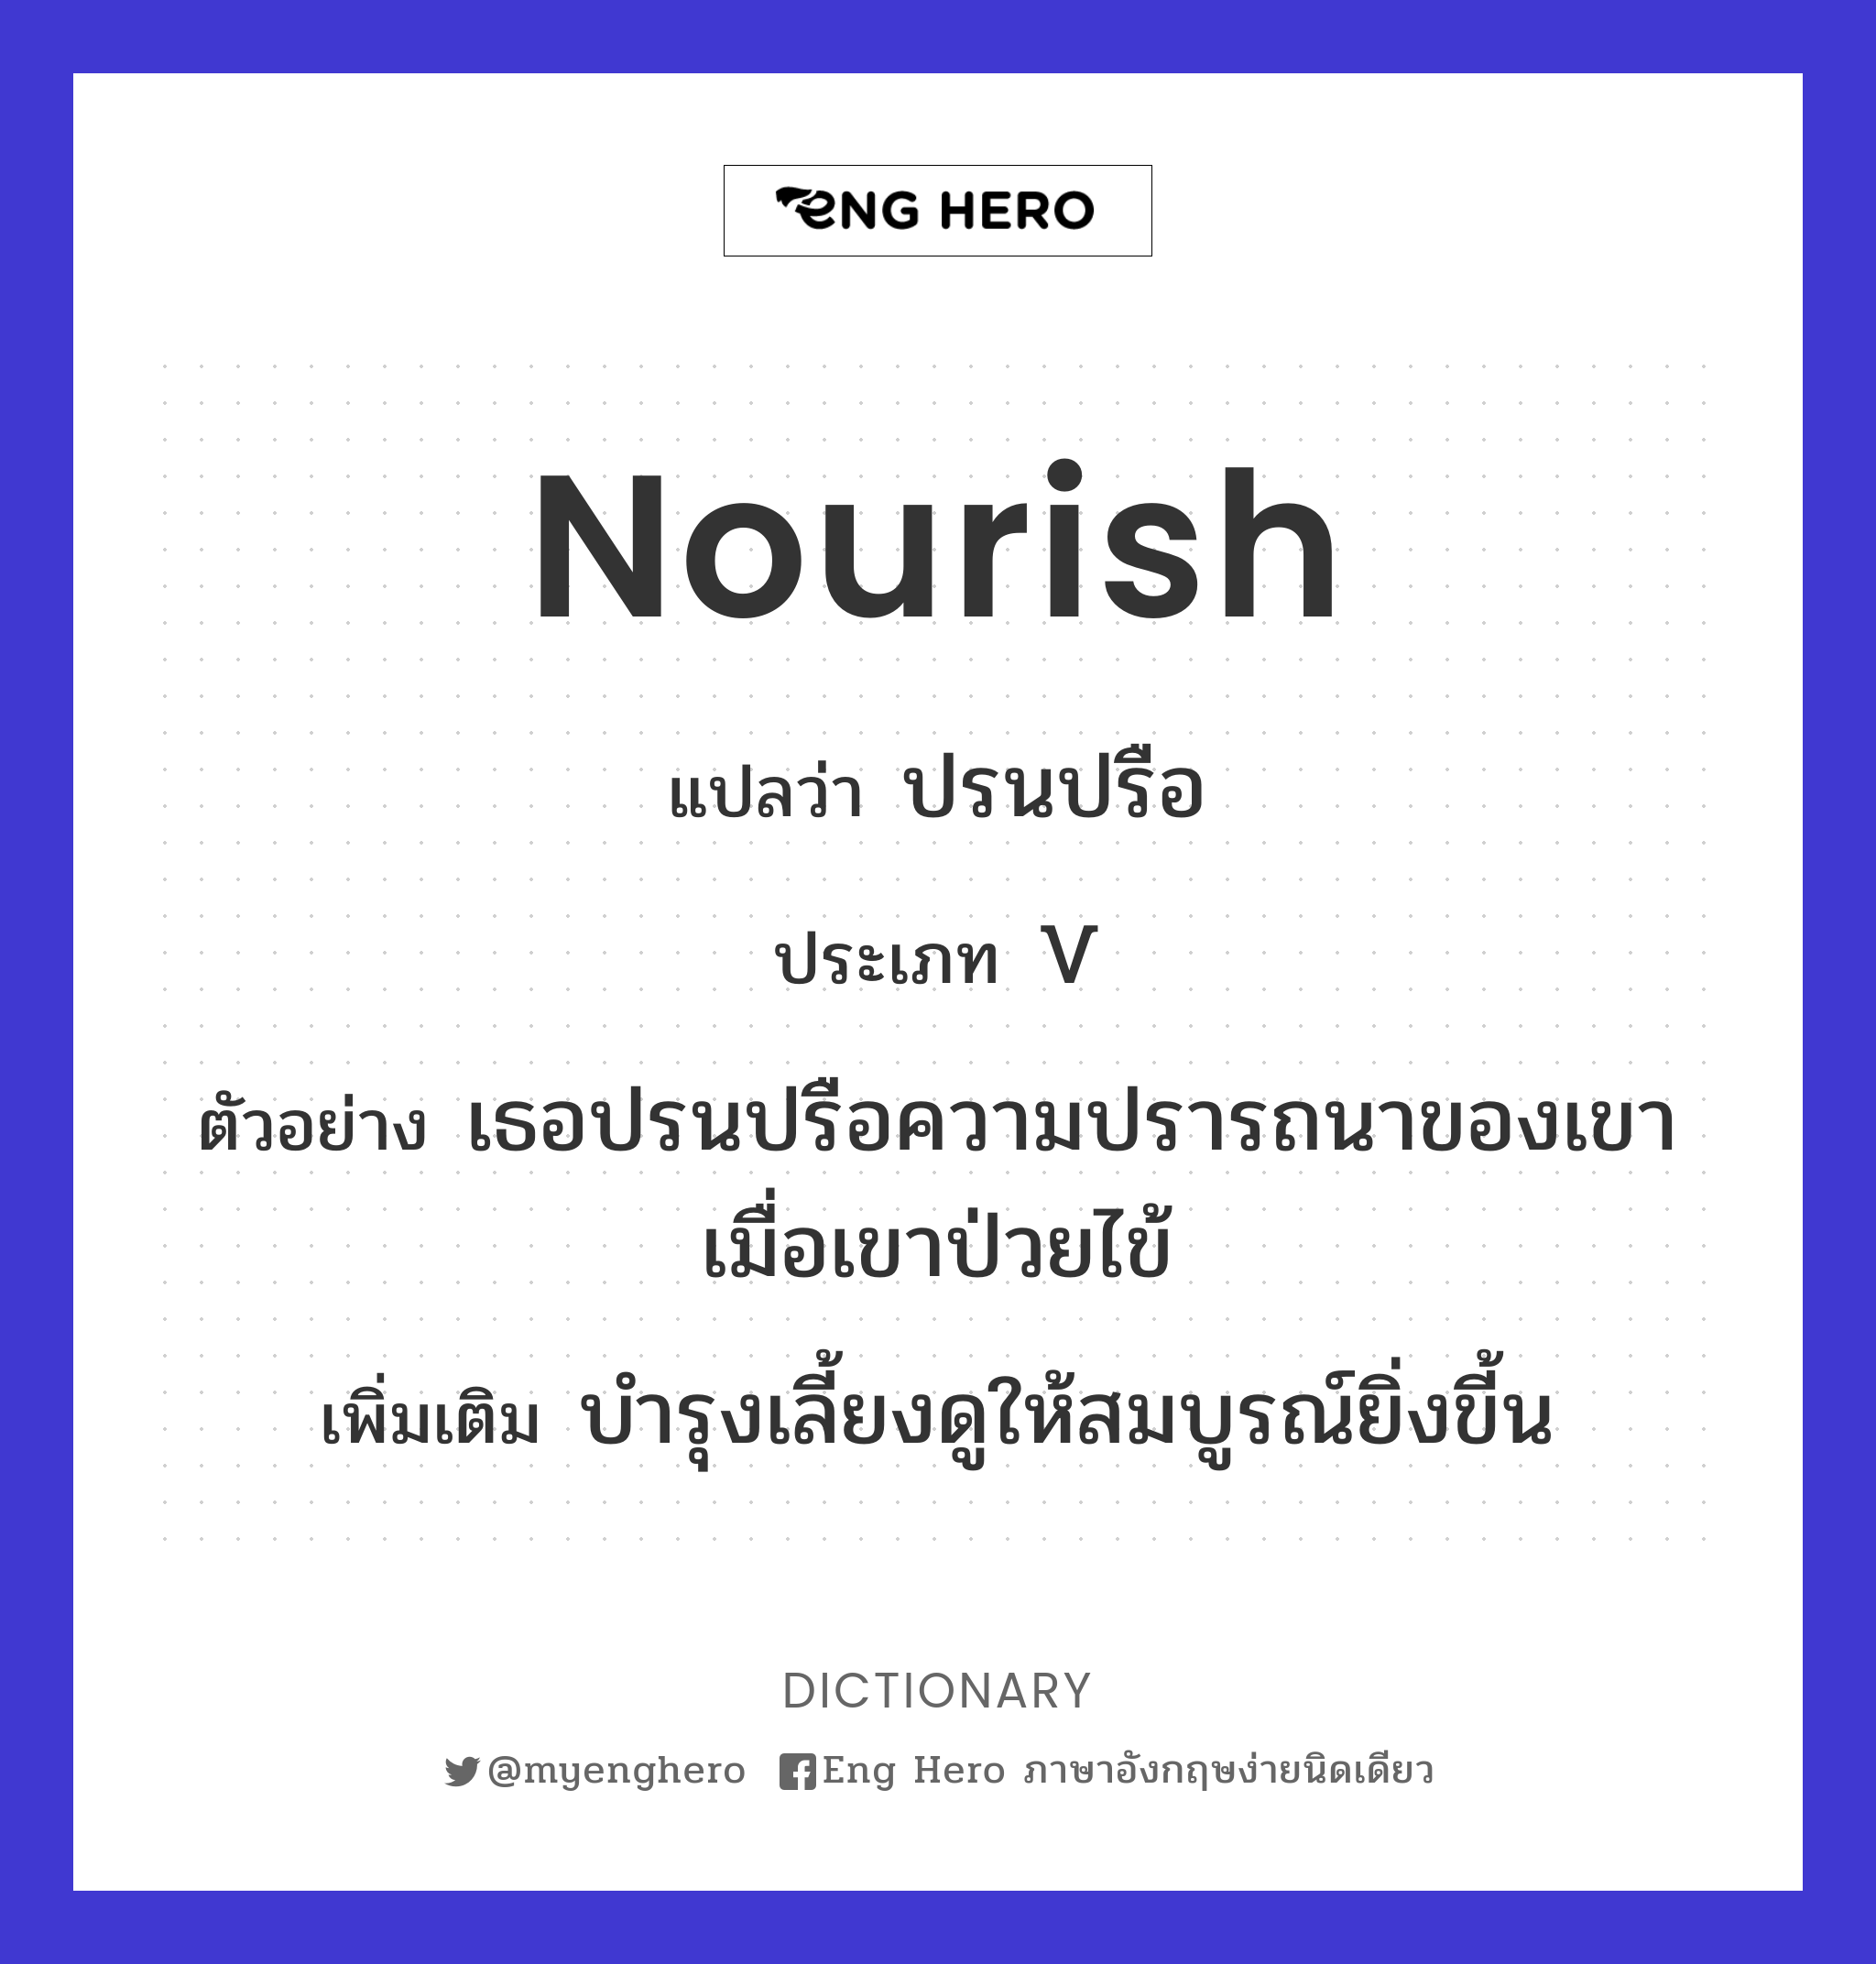 nourish